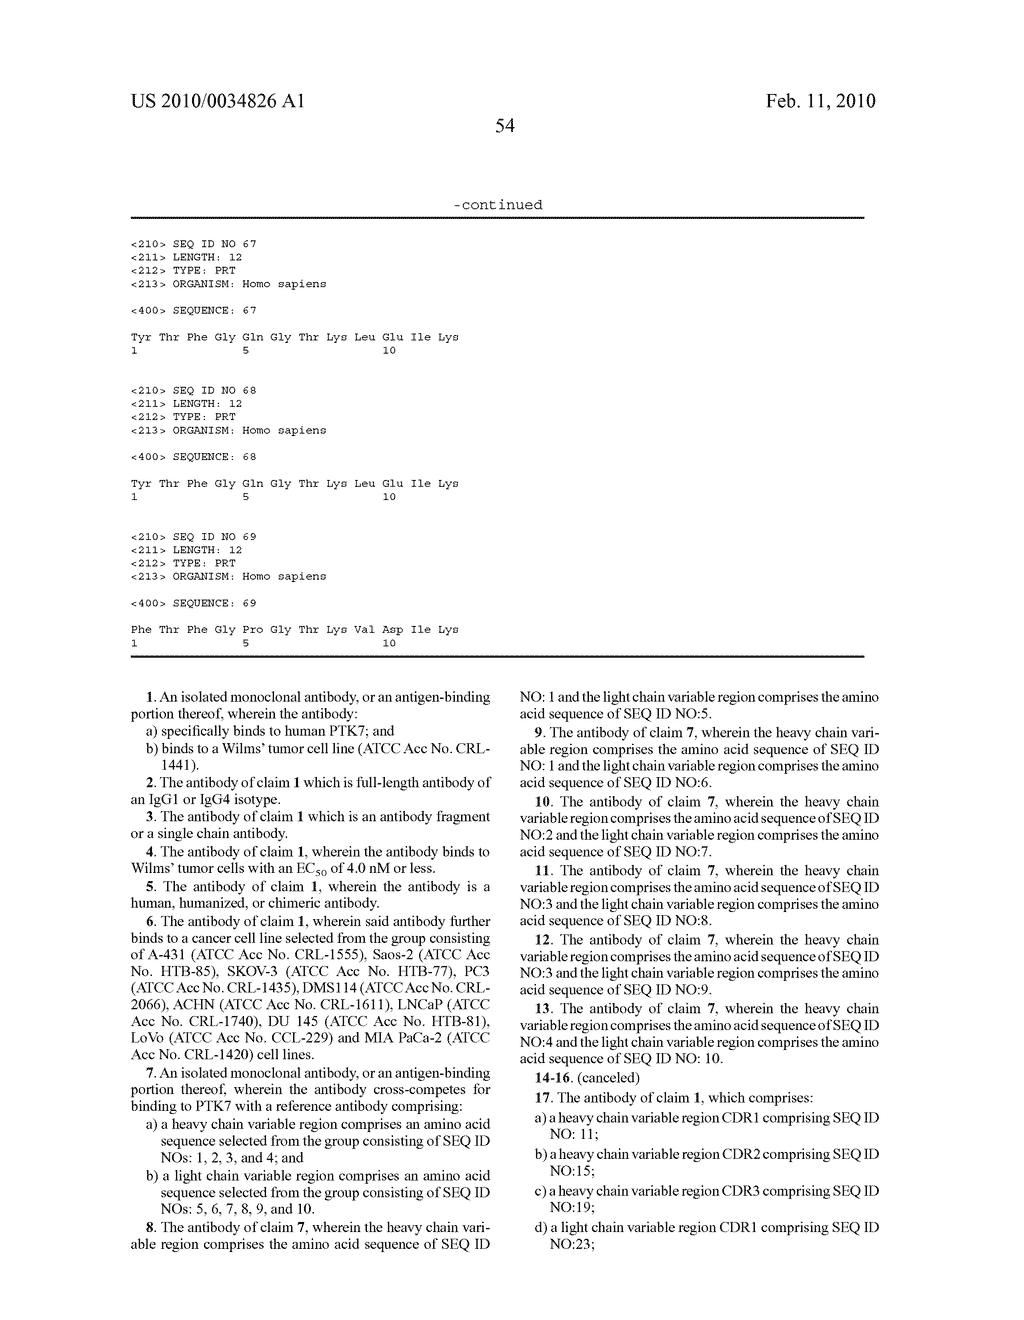 HUMAN MONOCLONAL ANTIBODIES TO PROTEIN TYROSINE KINASE 7 (PTK7) AND METHODS FOR USING ANTI-PTK7 ANTIBODIES - diagram, schematic, and image 87